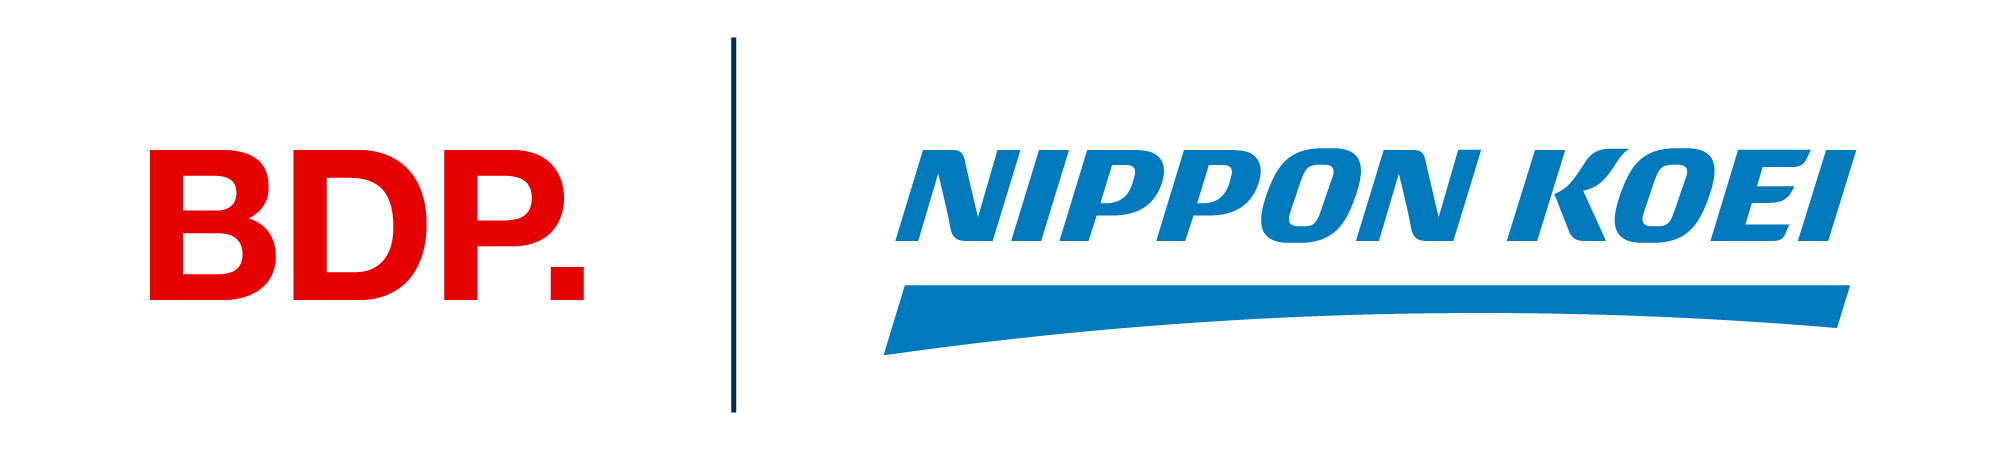 BDP & NIPPON KOEI